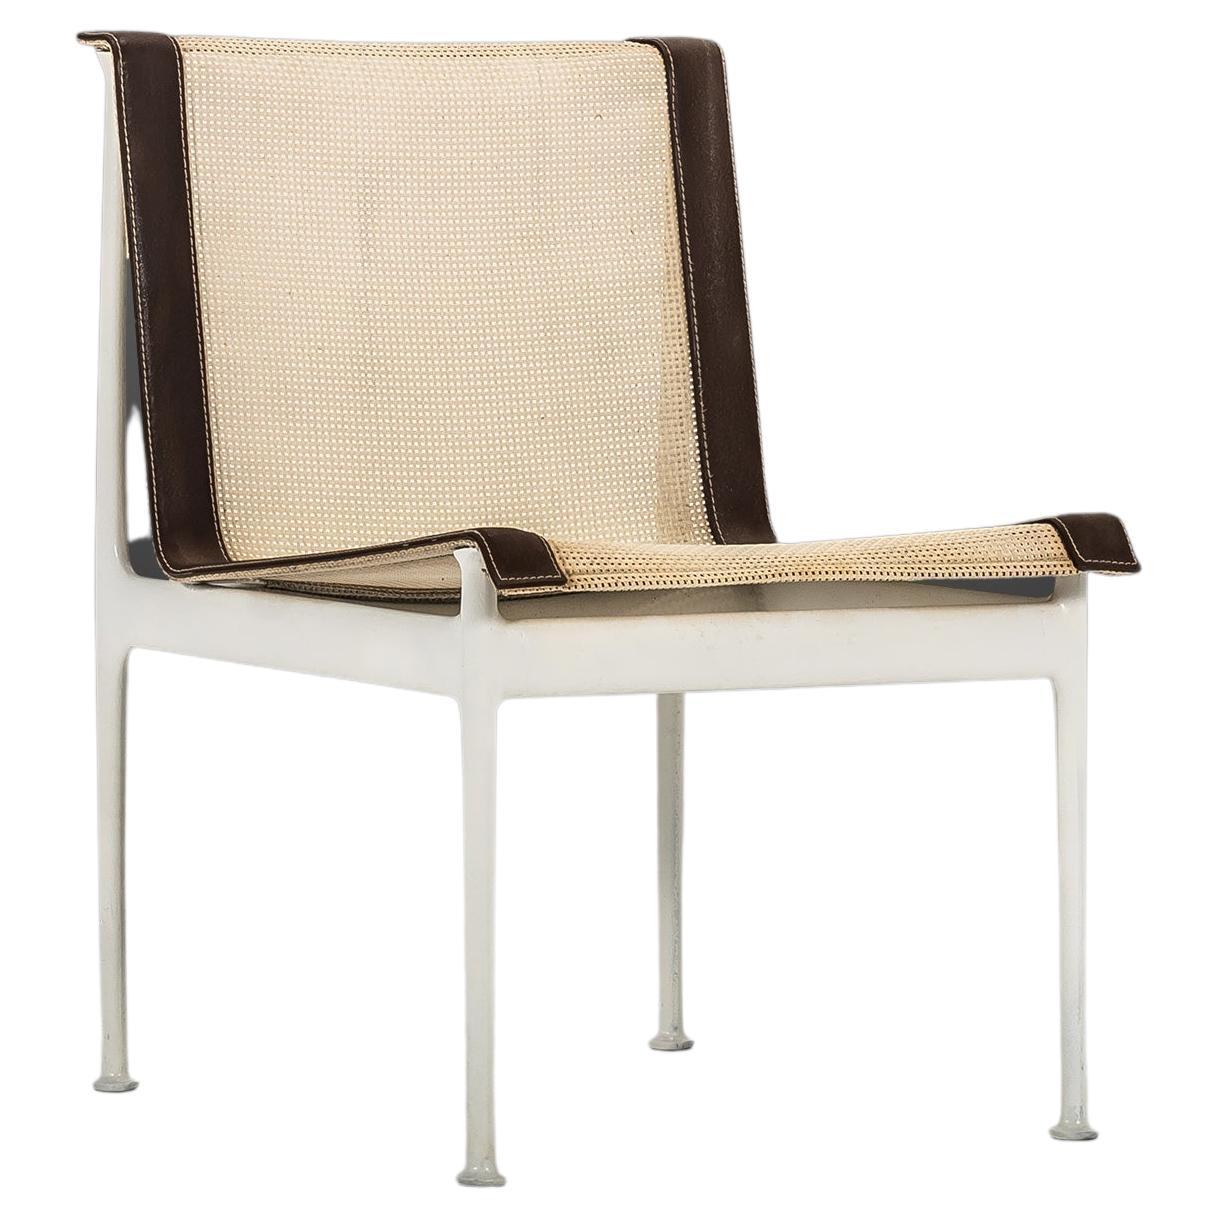 Armless Mid-Century Modern Patio Chair by Richard Schultz for Knoll, USA, 1960's